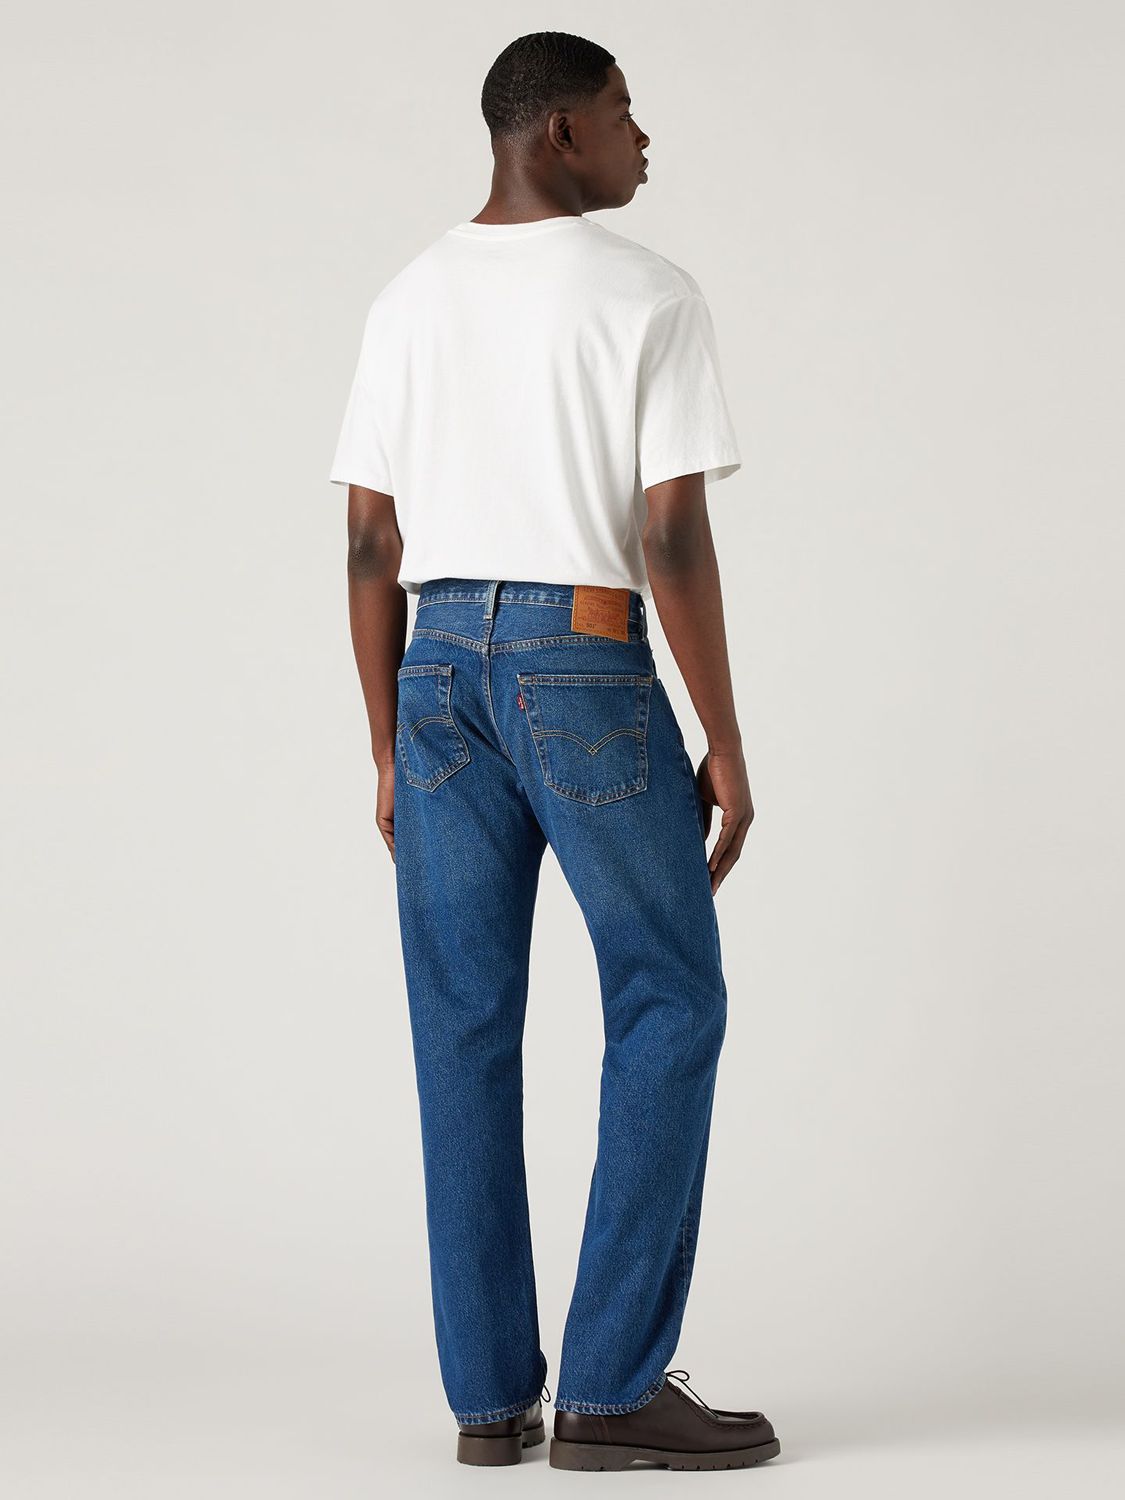 Levi's 501 Original Straight Jeans, Indigo Wash, 30S